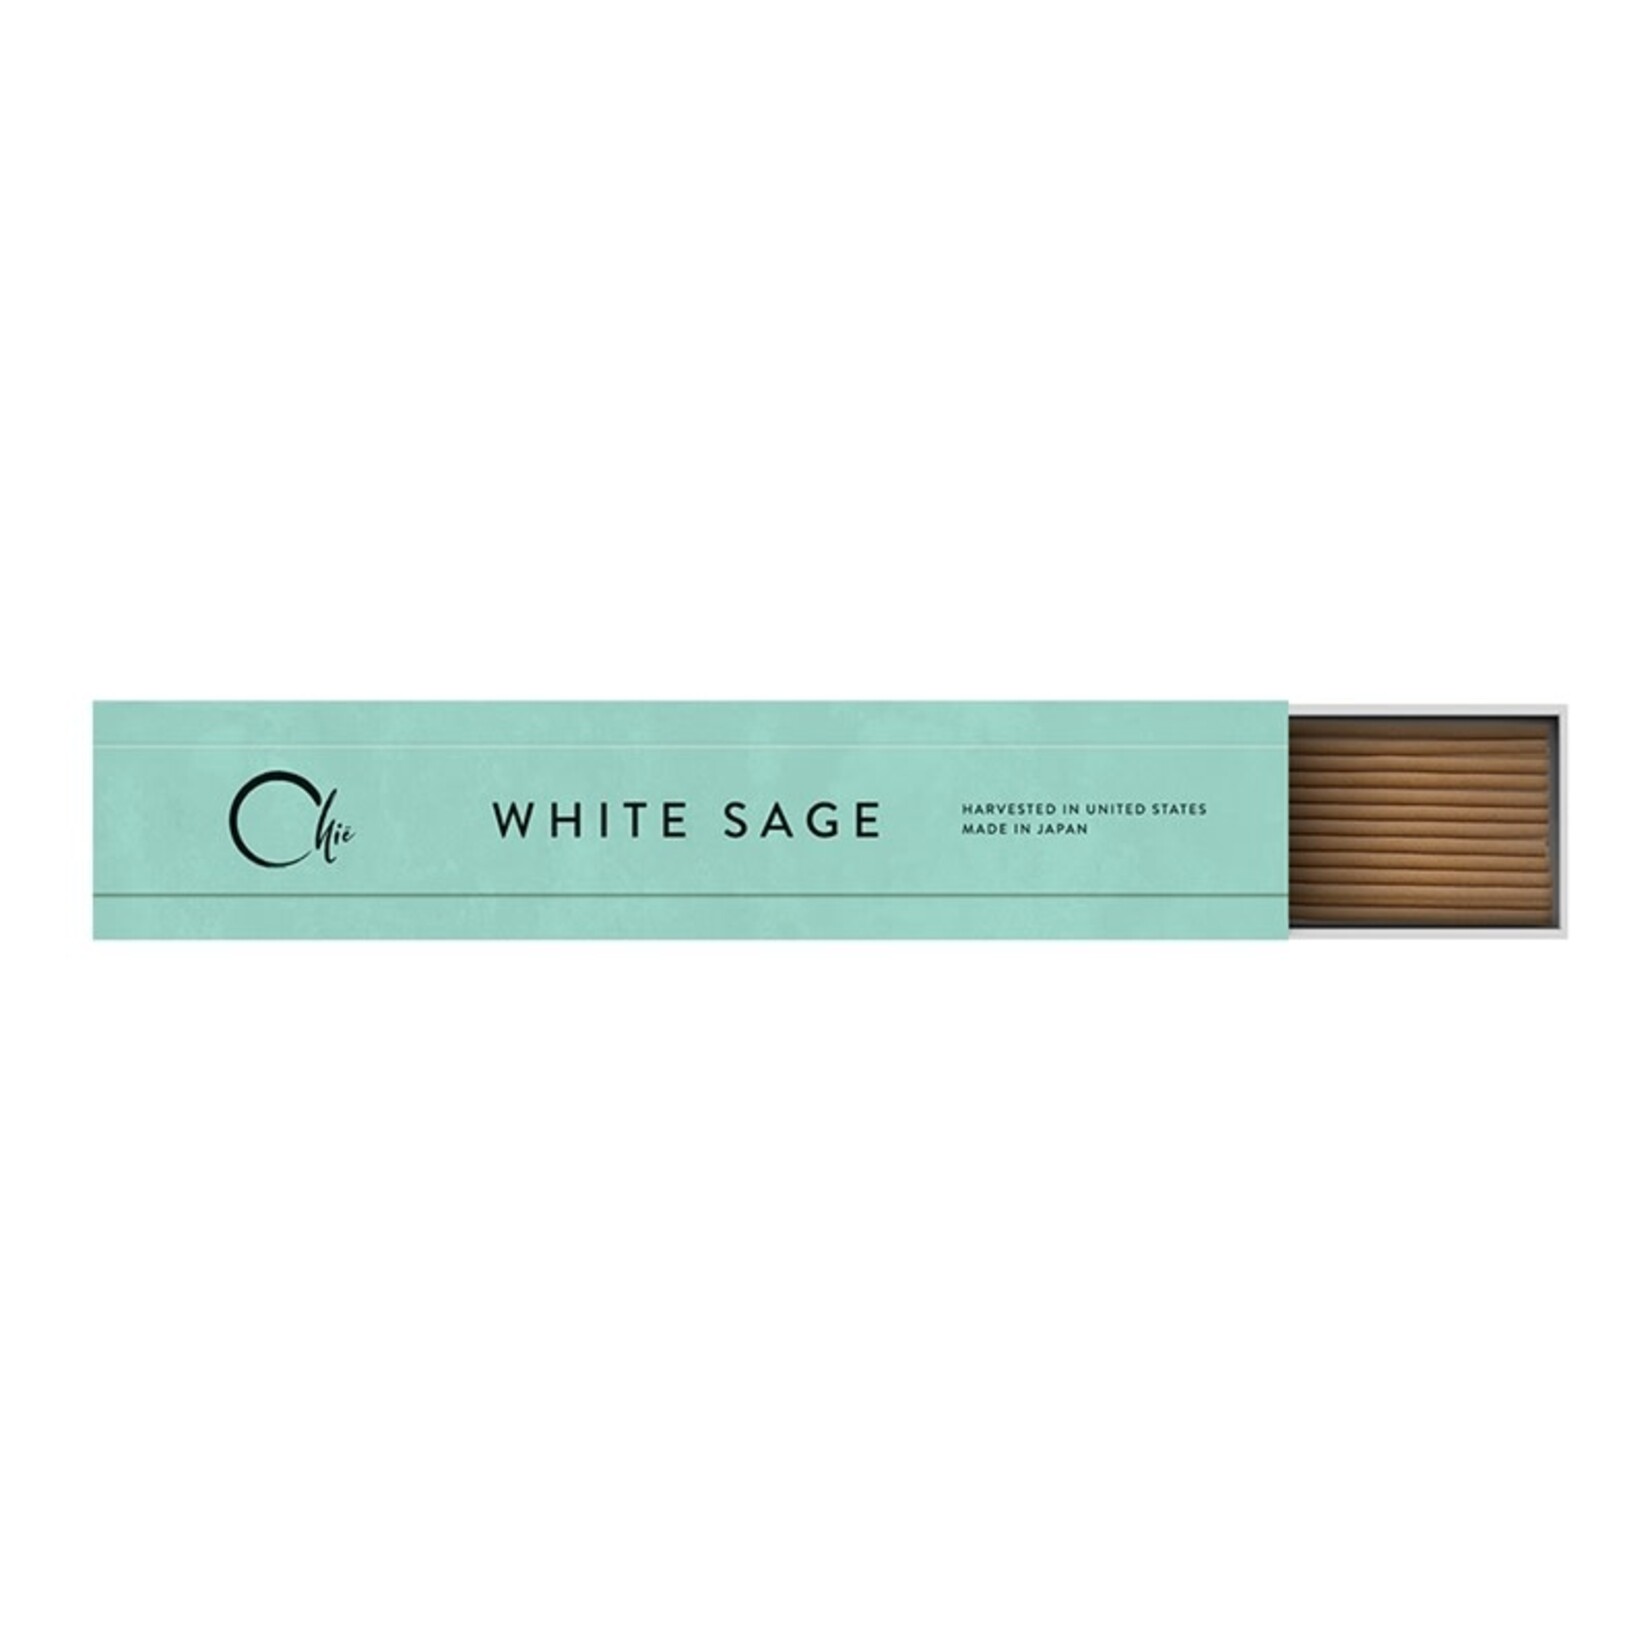 Nippon Kodo White Sage Incense Sticks